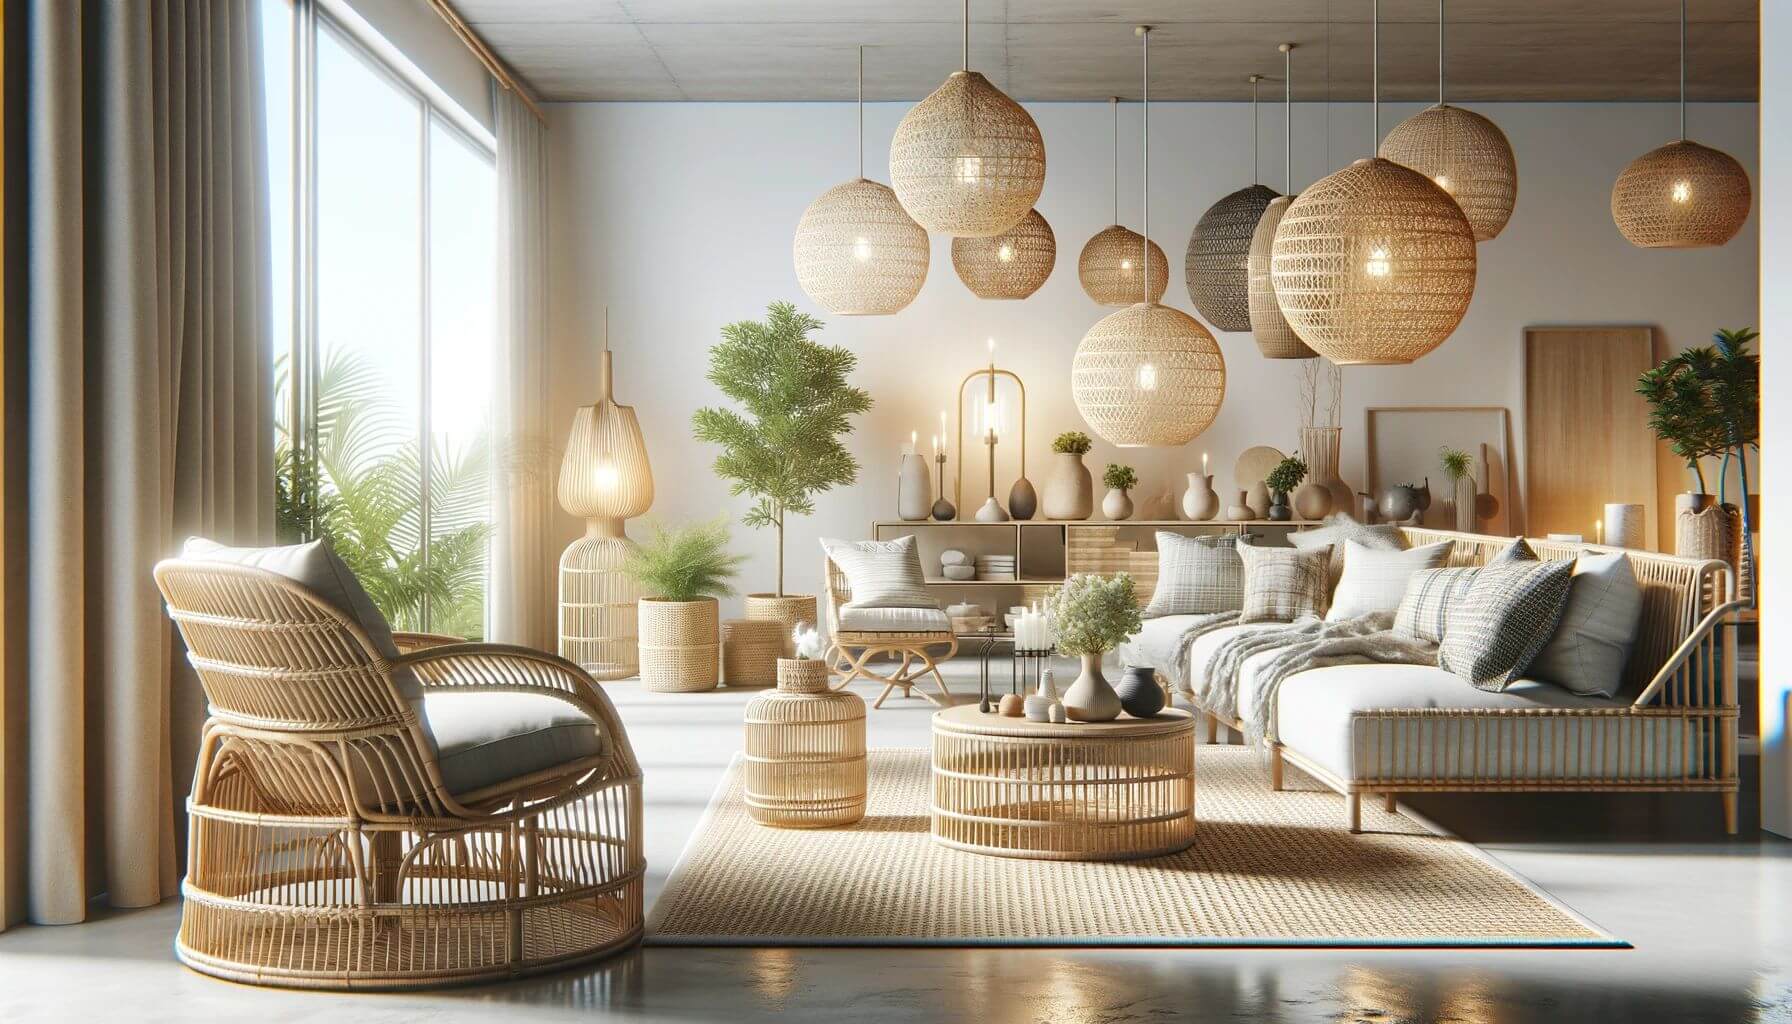 How to choose indoor rattan furniture: 17 tips